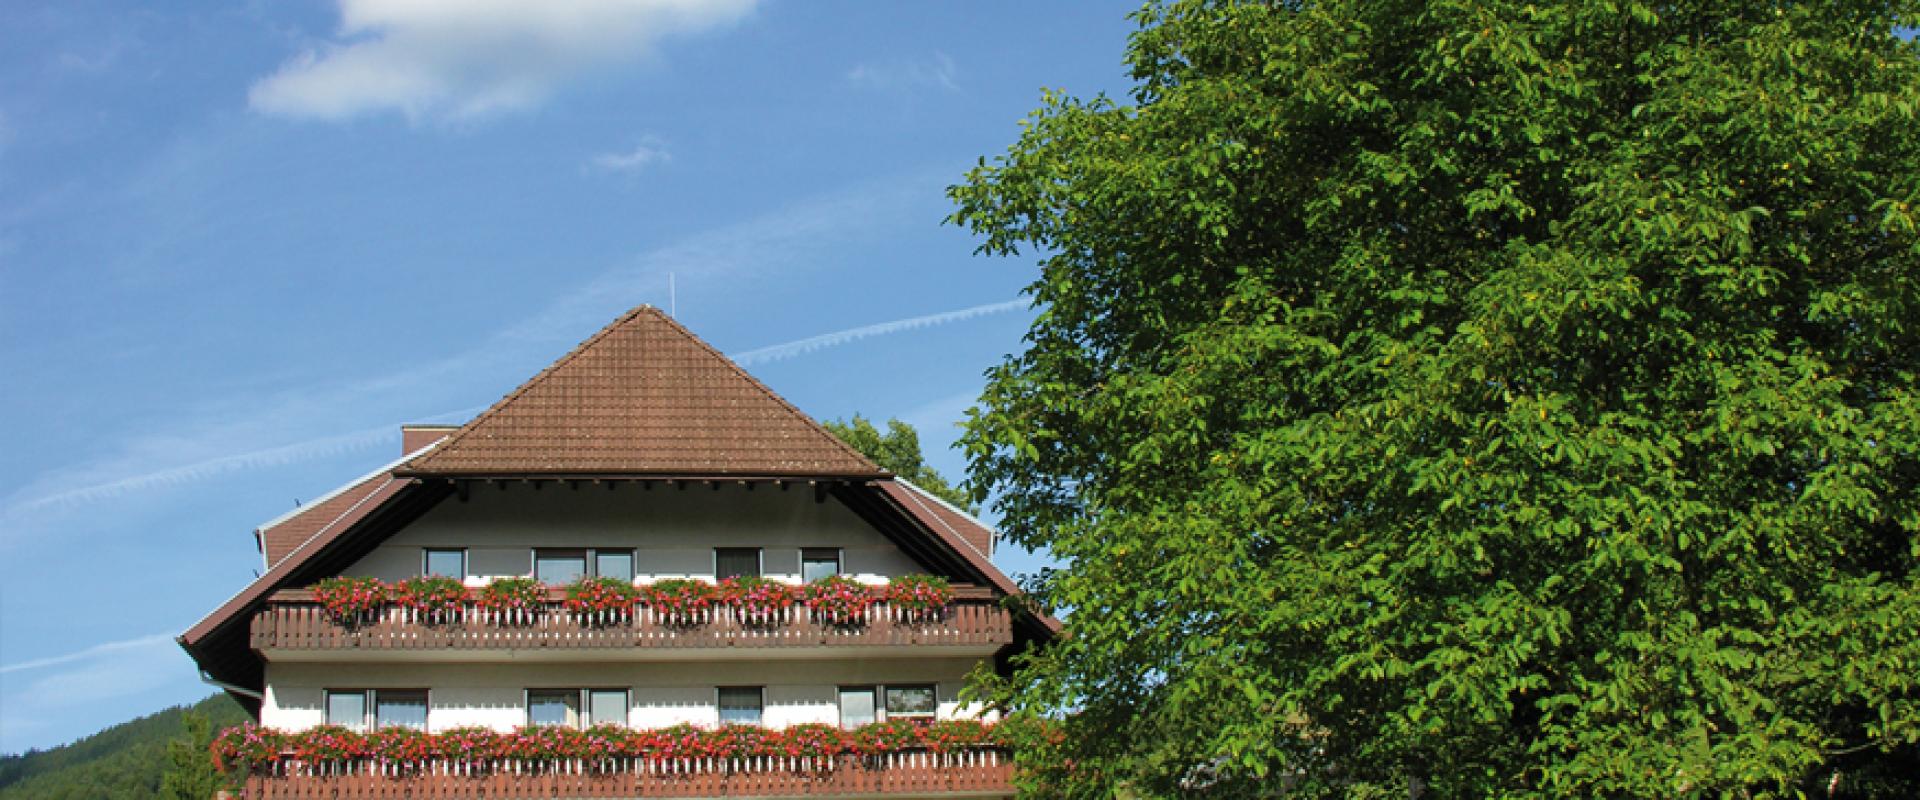 12832 Motorrad Hotel Endehof im Schwarzwald.jpg